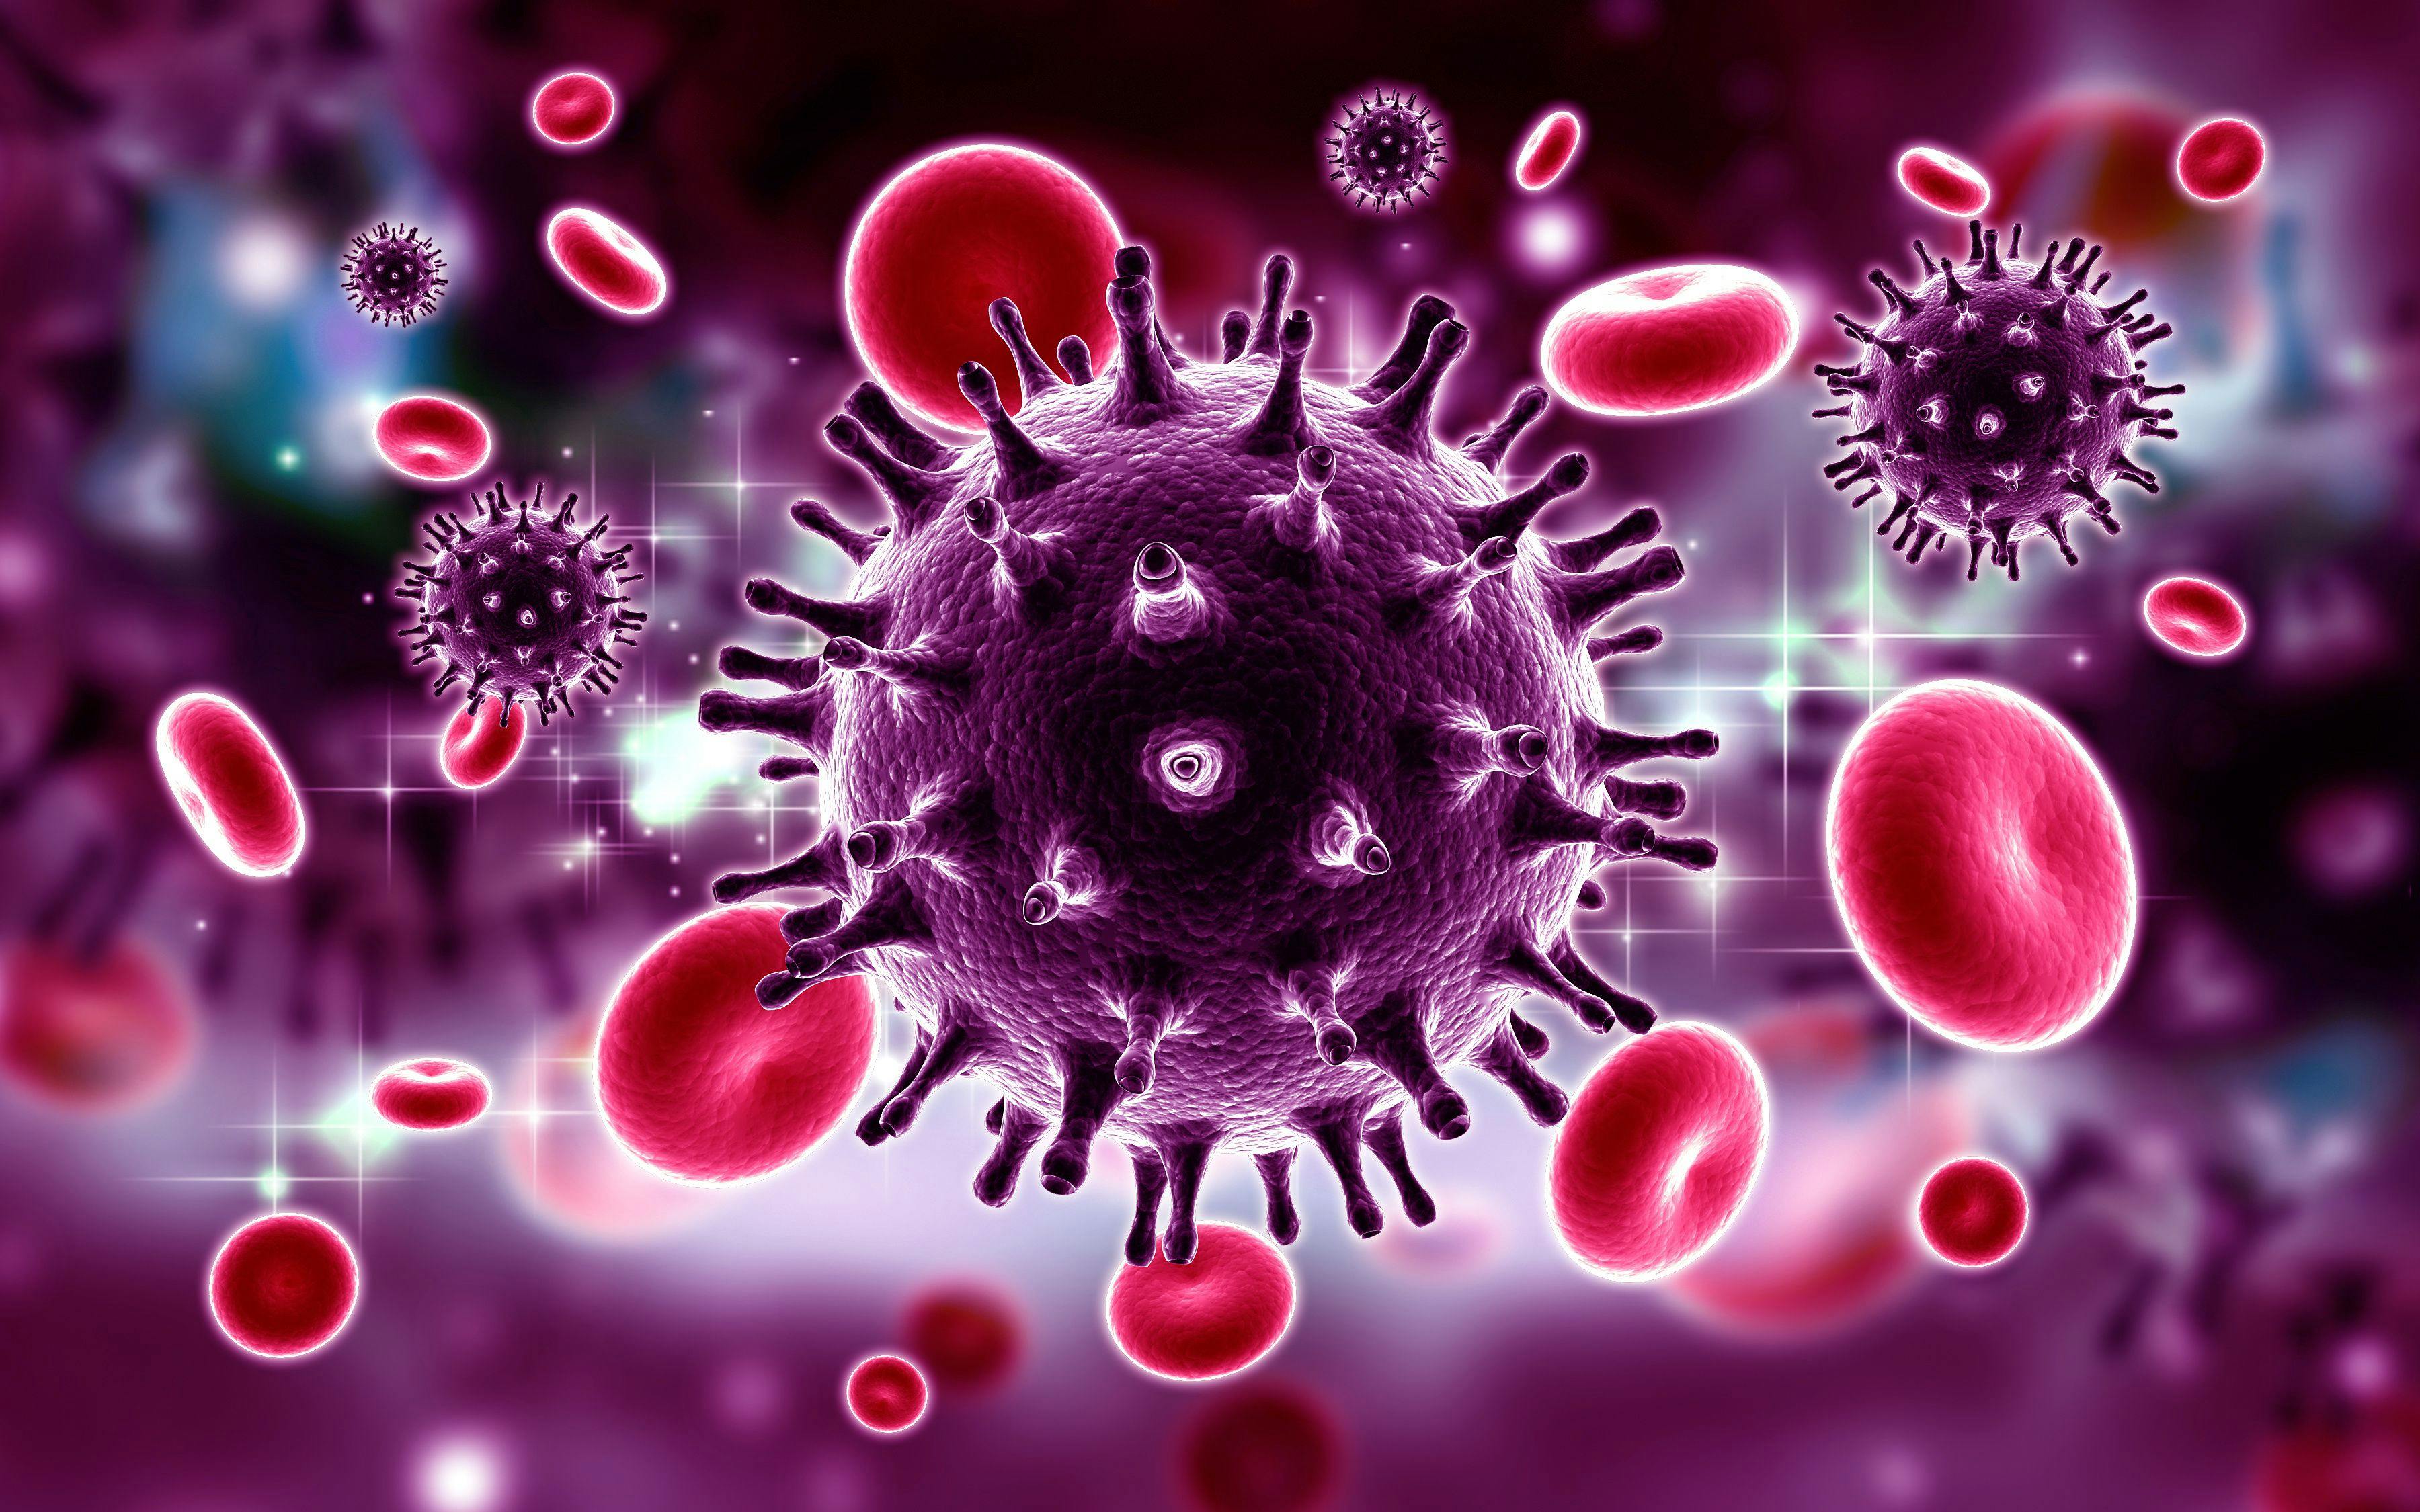 HIV Virus | Image credit: RAJCREATIONZS - stock.adobe.com